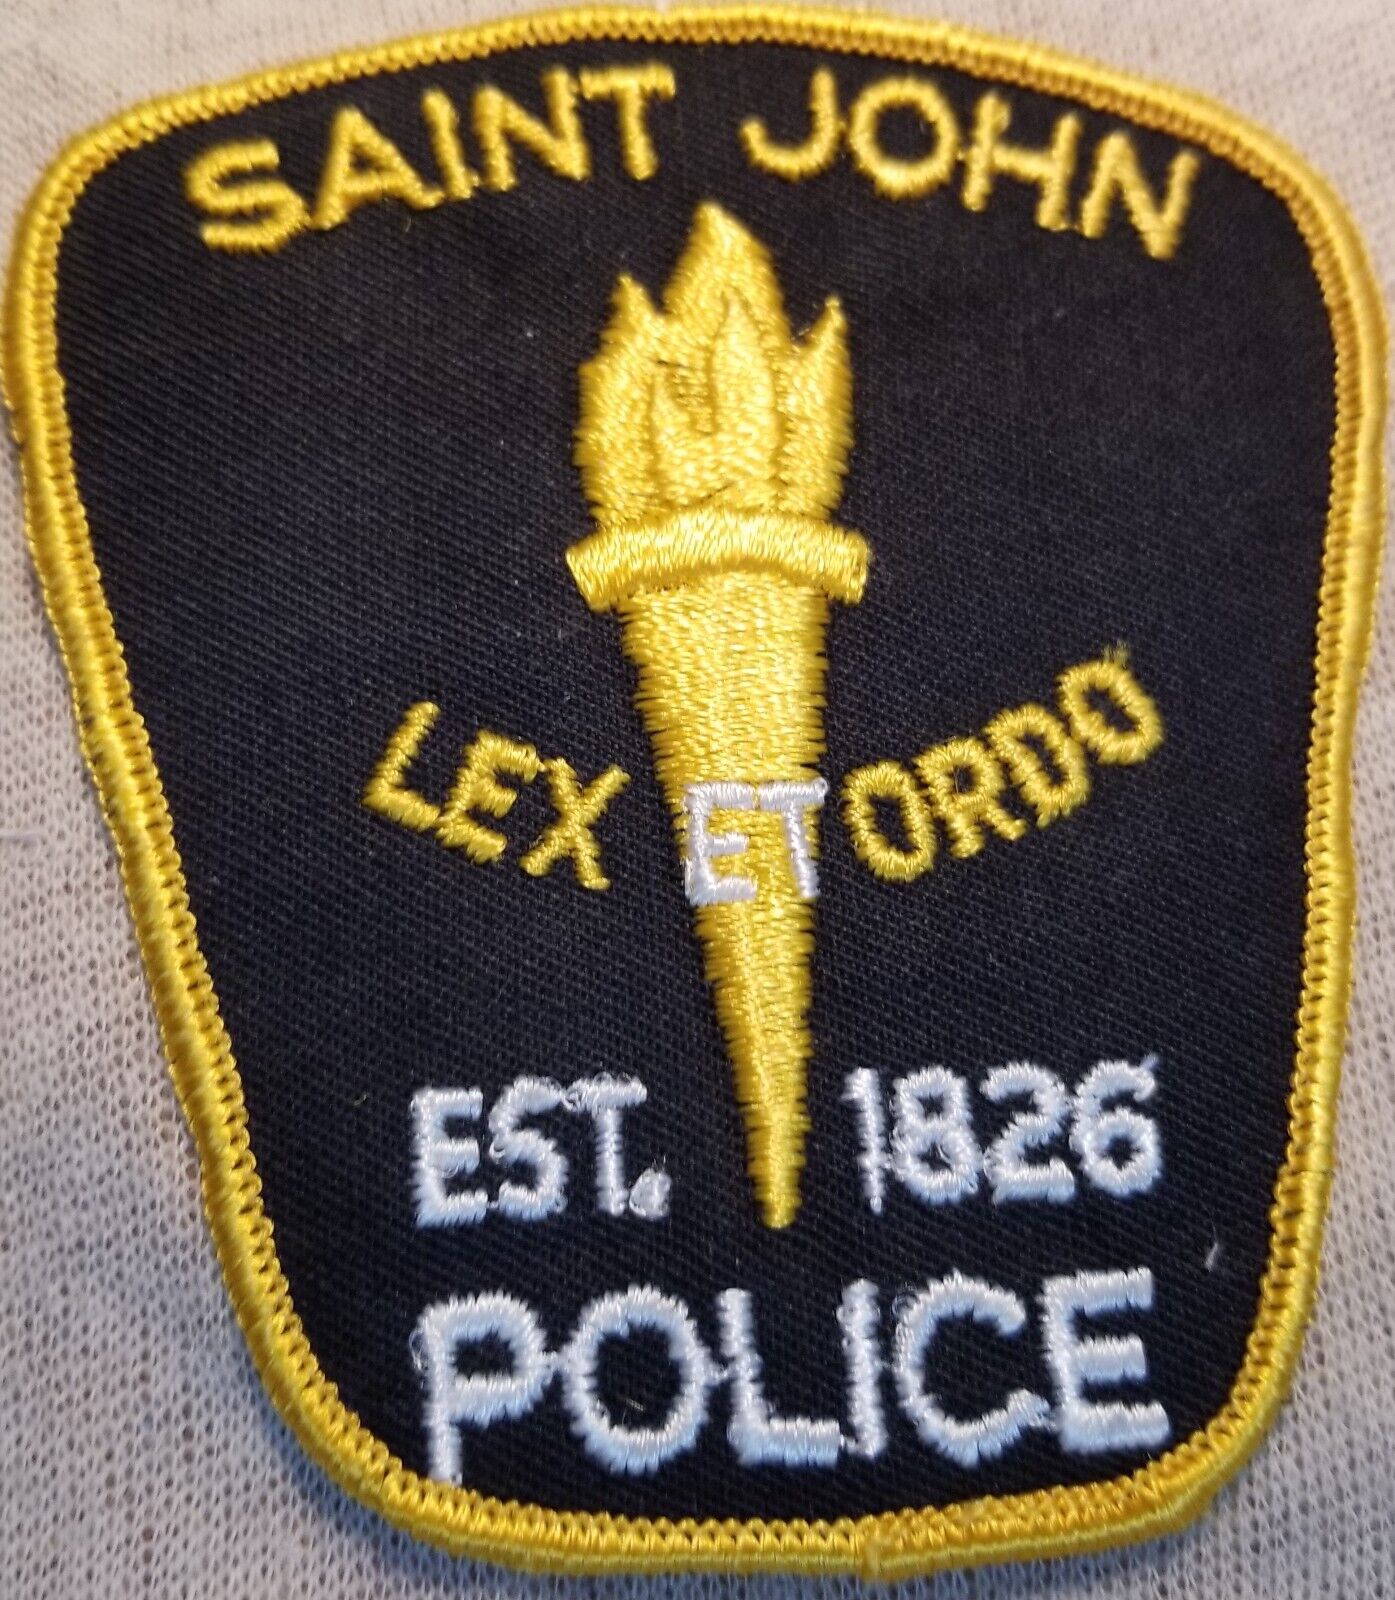 Ca St. John Canada Police Patch